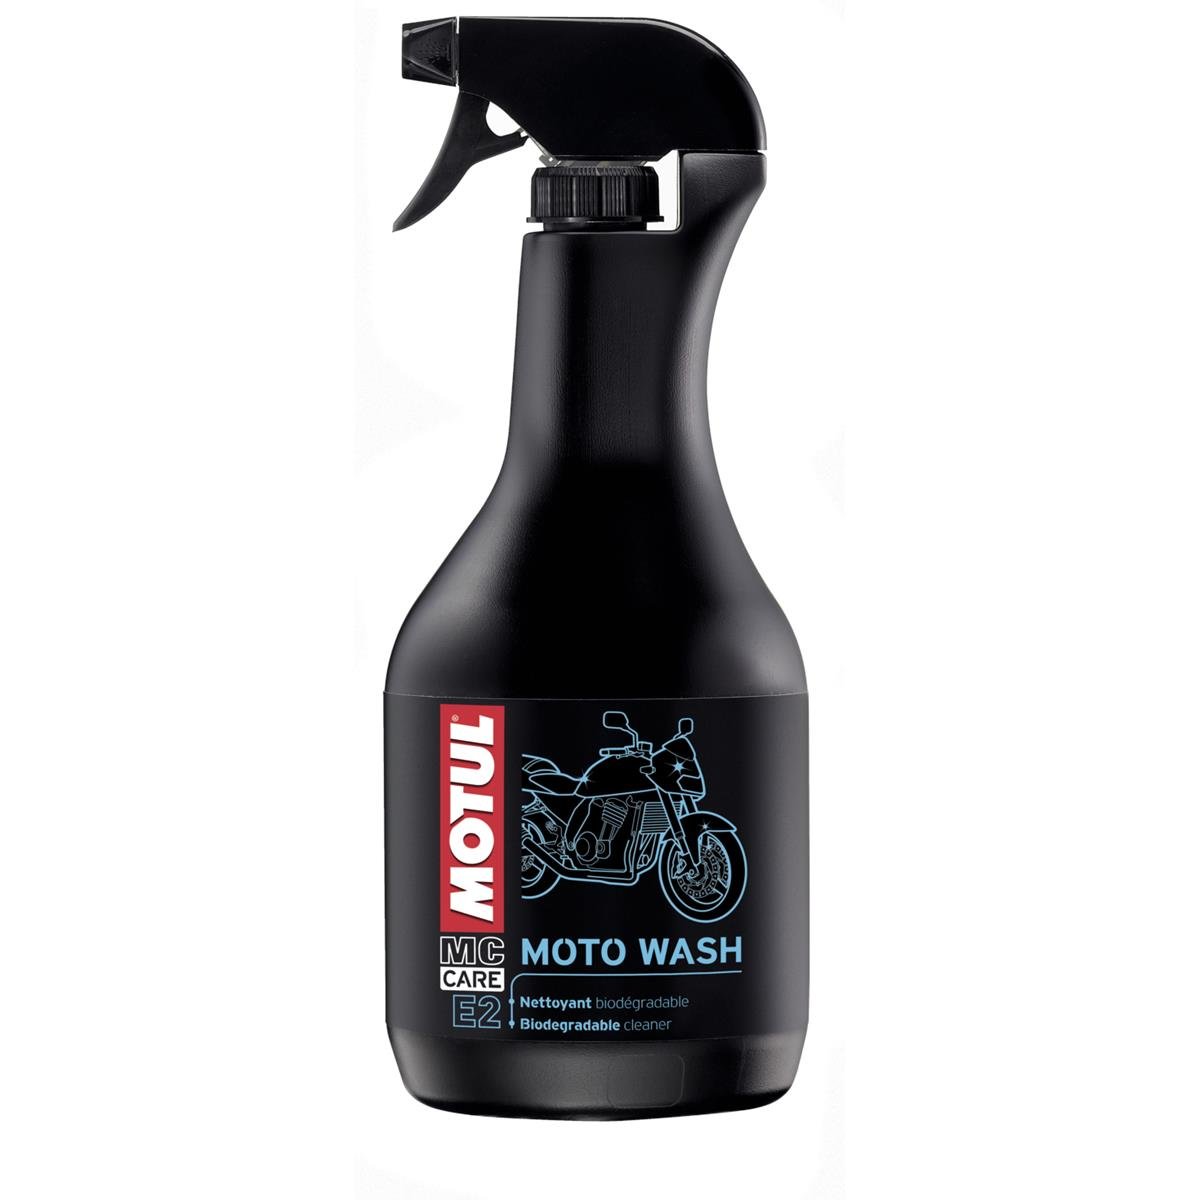 Motul Nettoyant Velo Moto Wash E2 MC Care, 1 L